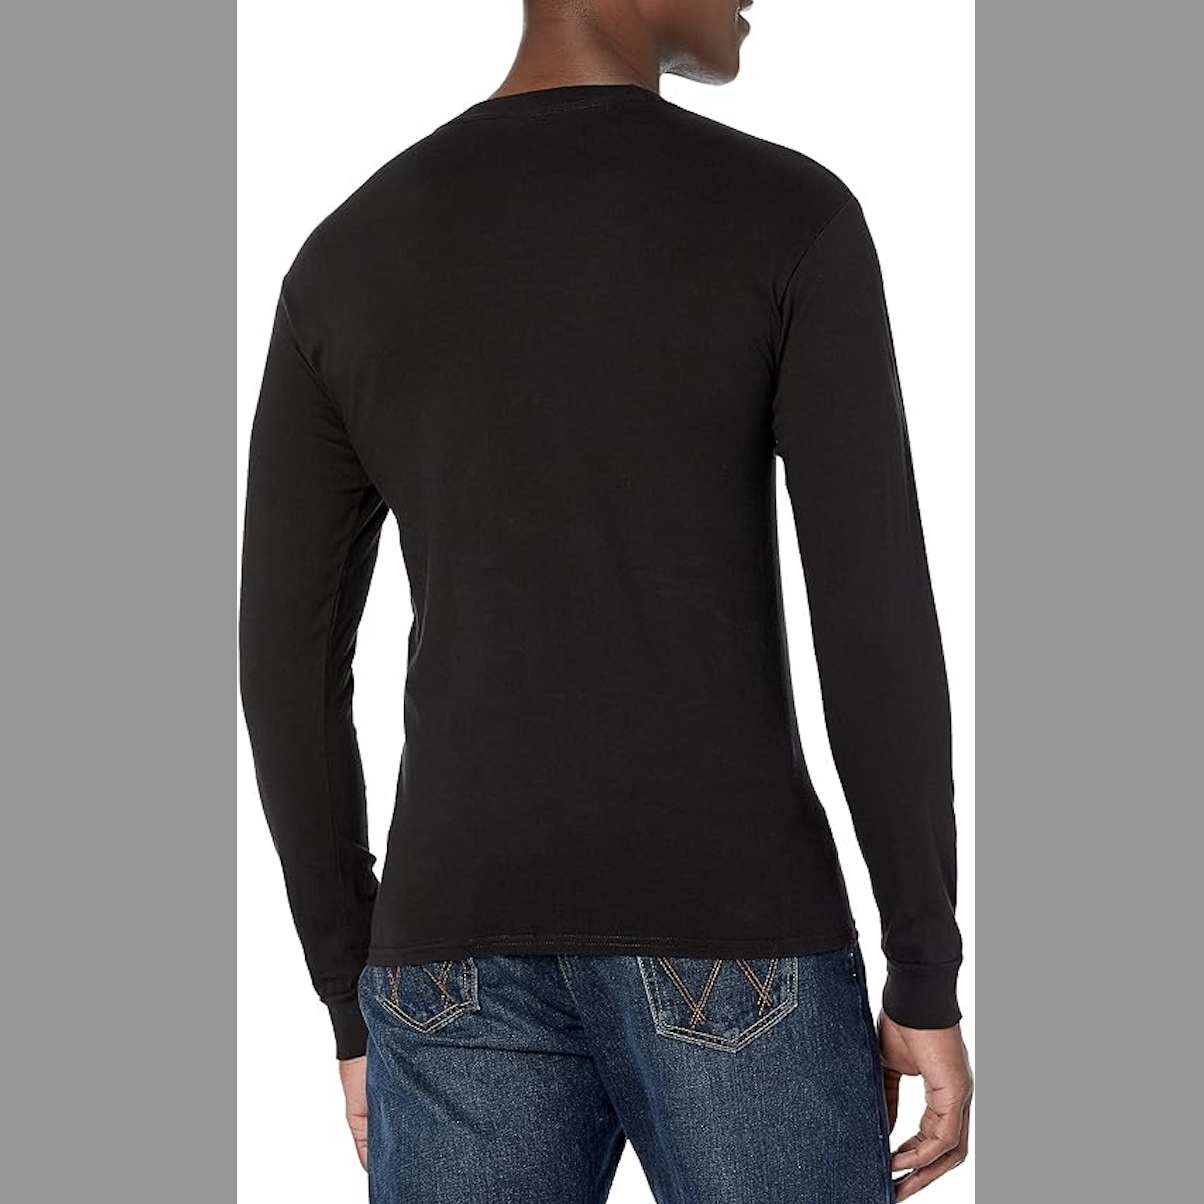 【黑色限定】Hanes 男款長袖 T 恤 x2 $11.99